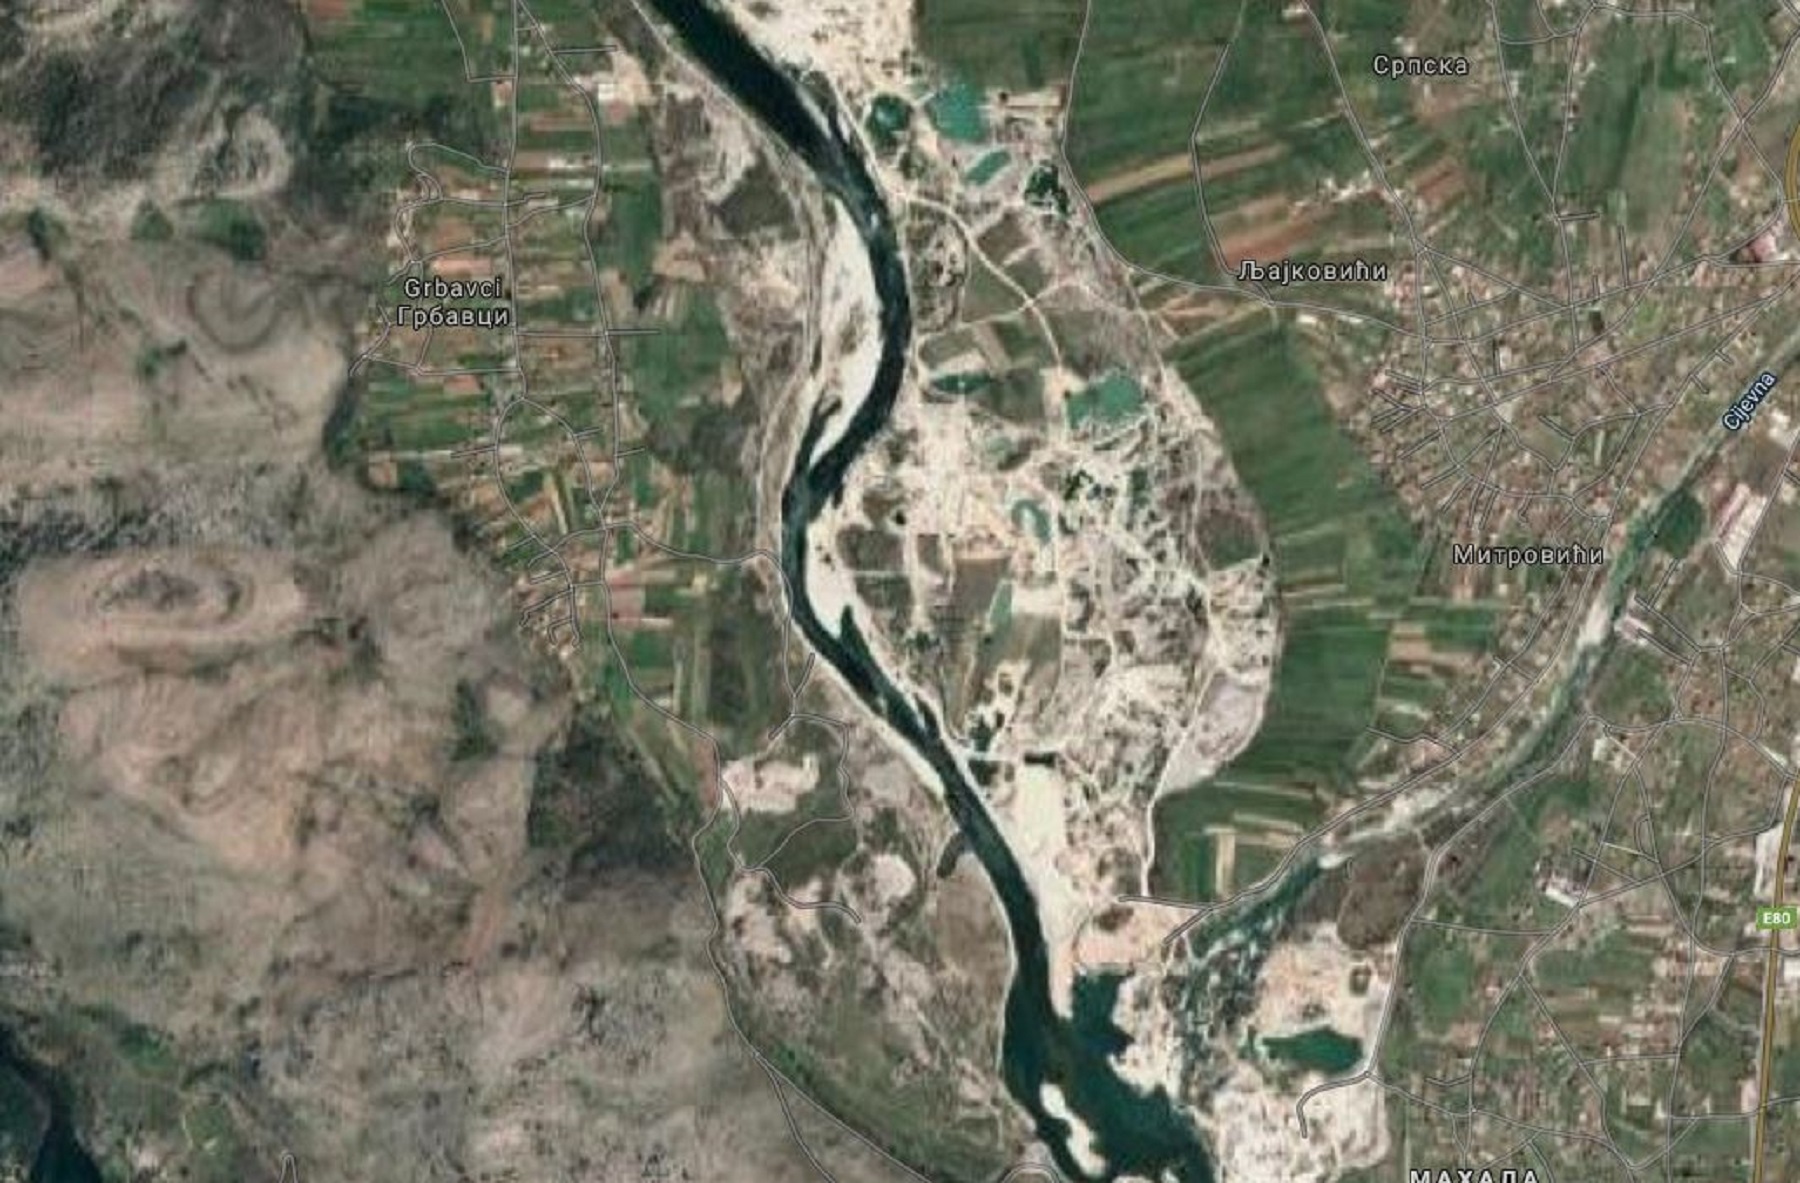 Kiesabbau, Luftaufnahme (Google Maps, Bilder © 2021 CNES / Airbus, Landsat / Copernicus, Maxar Technologies, Kartendaten © 2021)